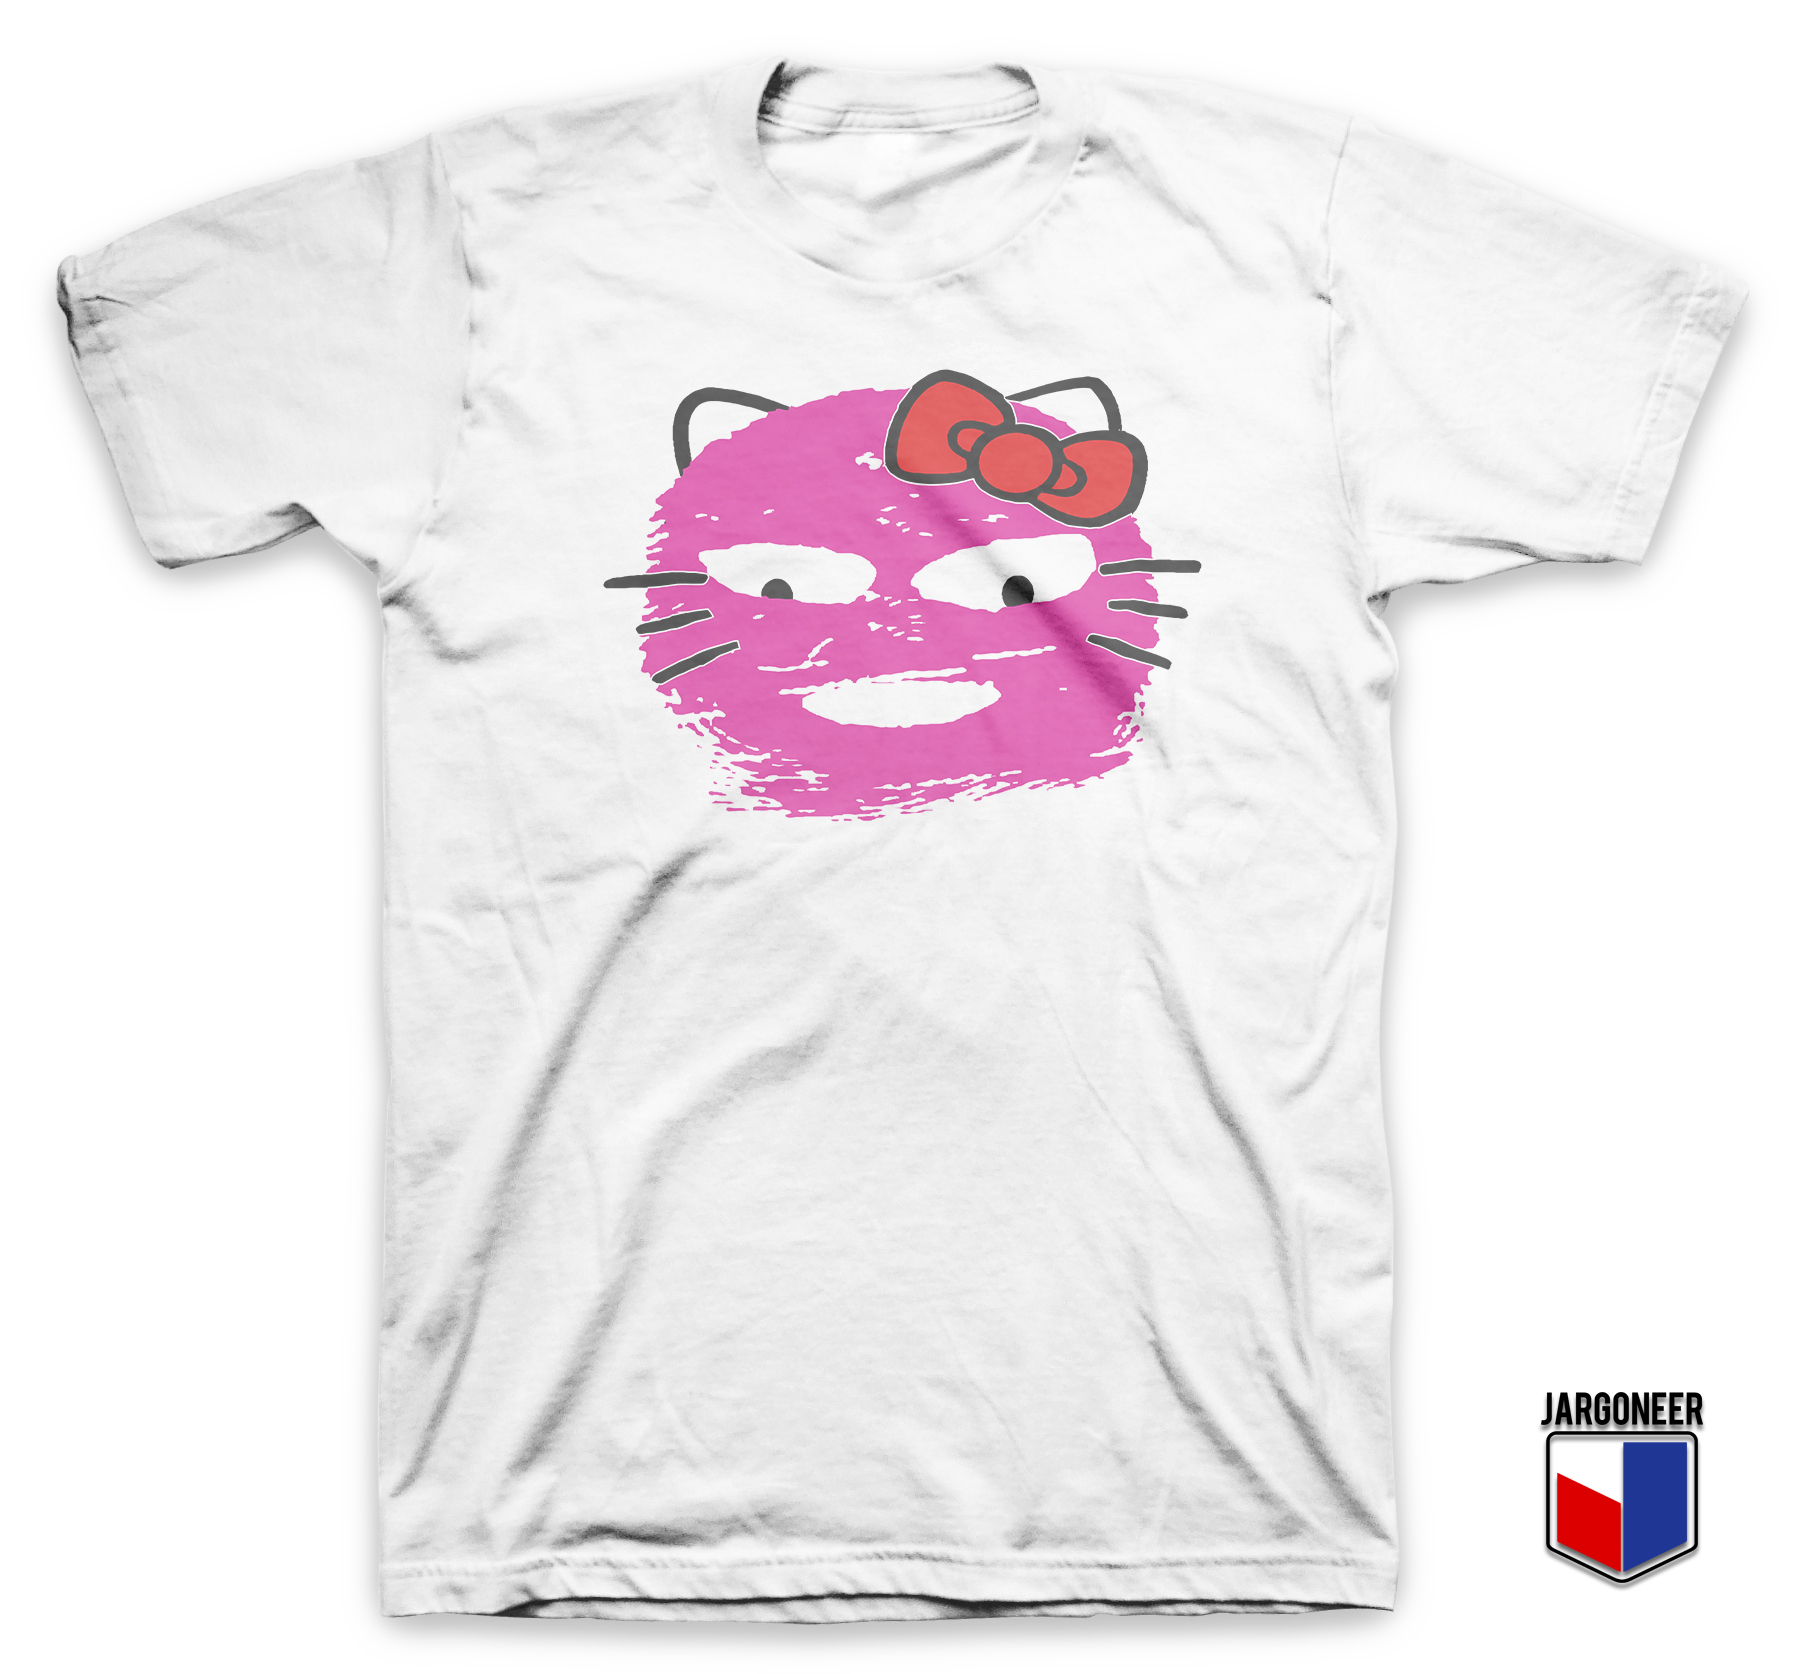 Kitty Riot White - Shop Unique Graphic Cool Shirt Designs